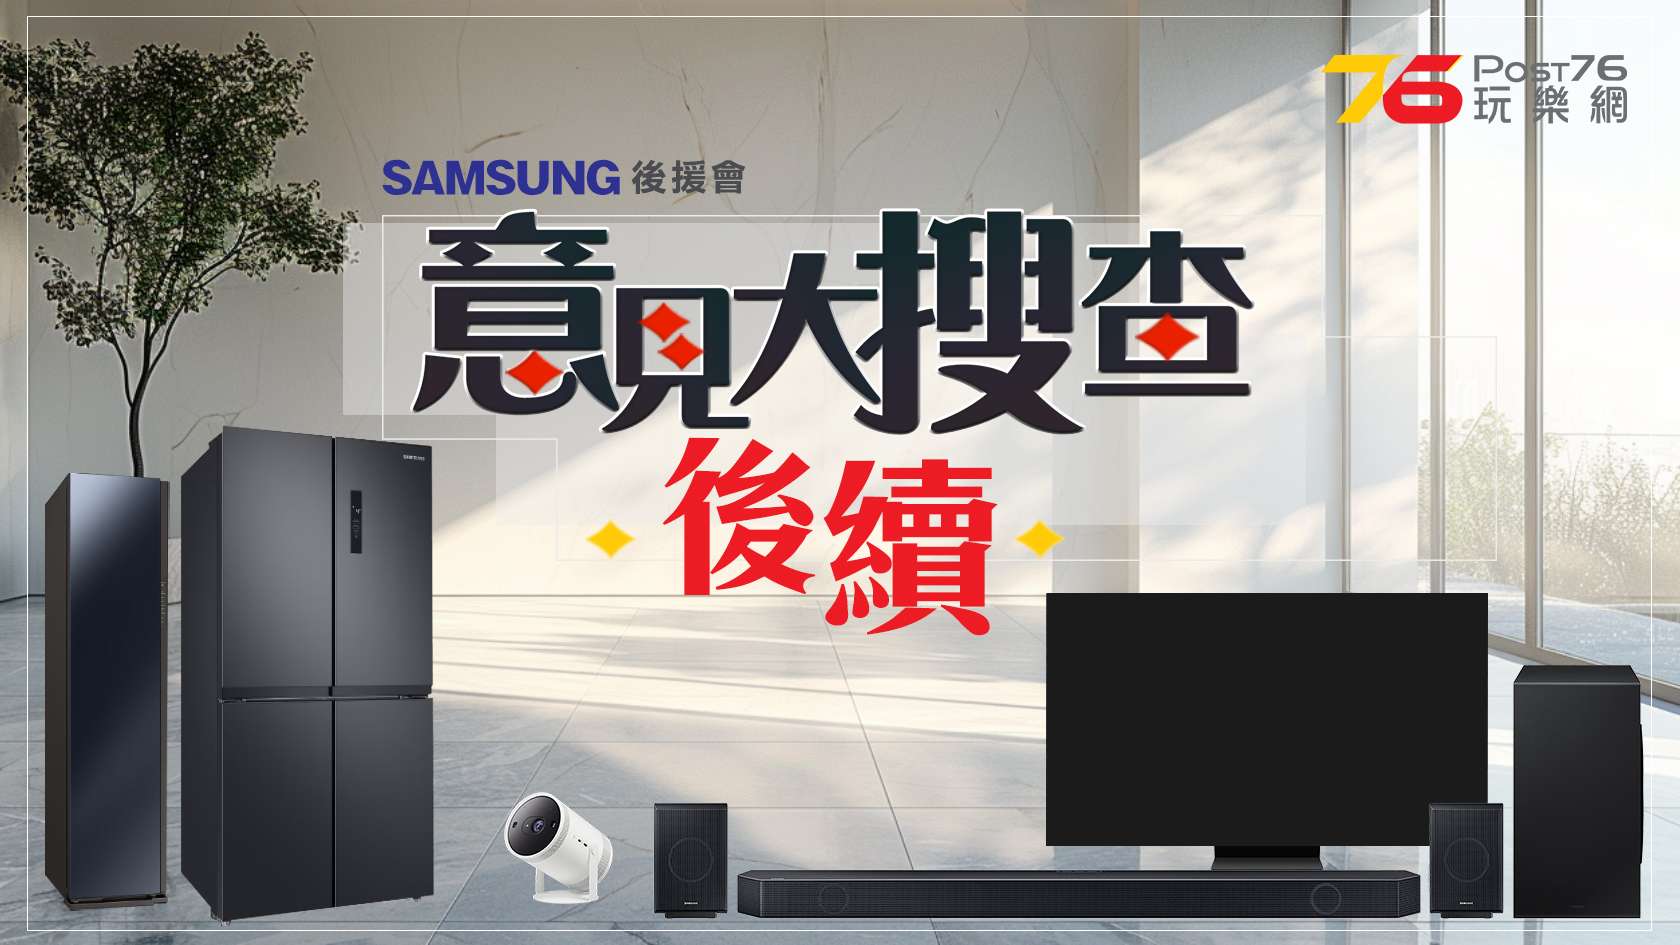 Samsung 後續封面_V03.jpg